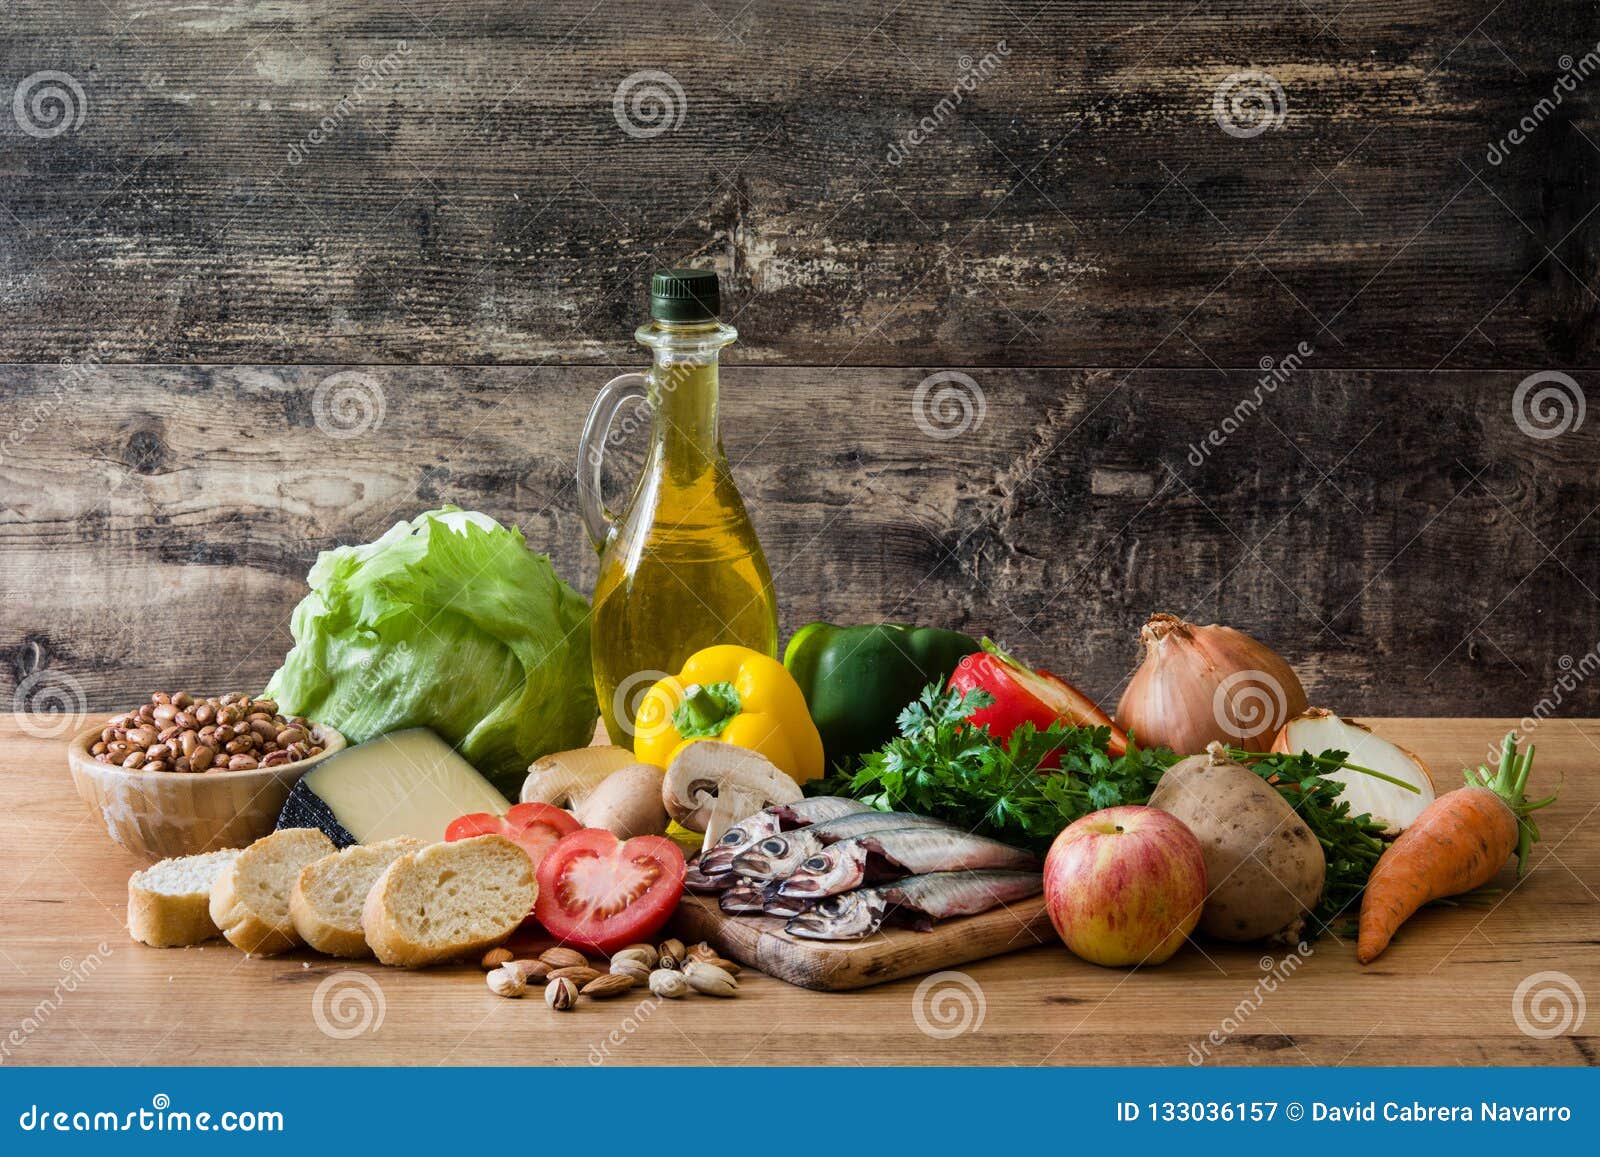 healthy eating. mediterranean diet. fruit,vegetables, grain, nuts olive oil and fish